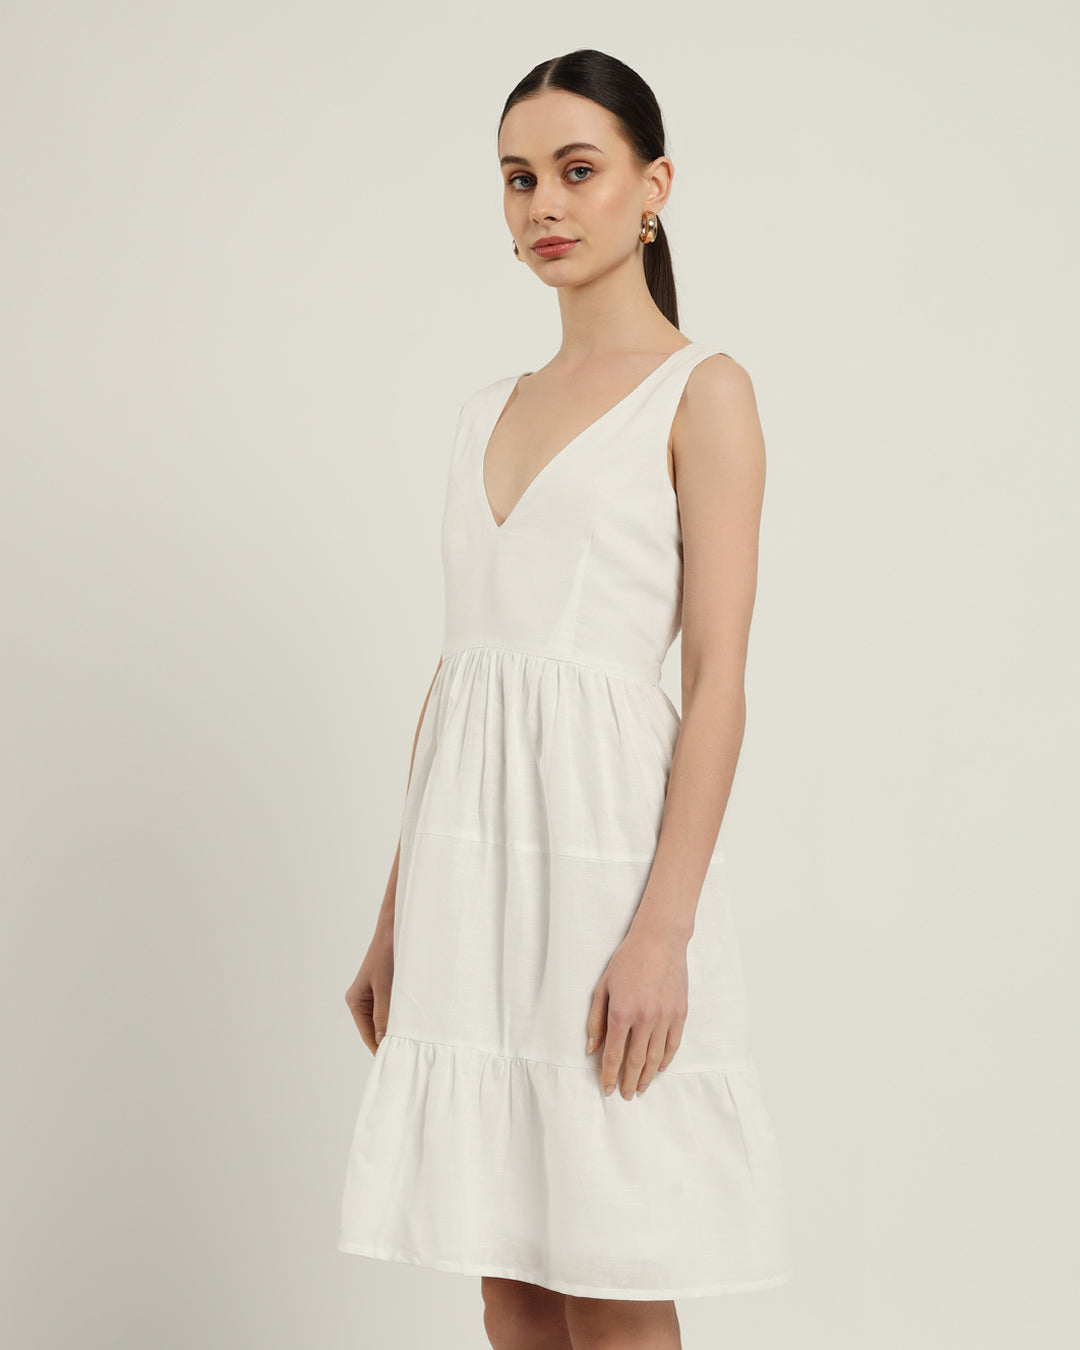 The Minsk Daisy White Linen Dress